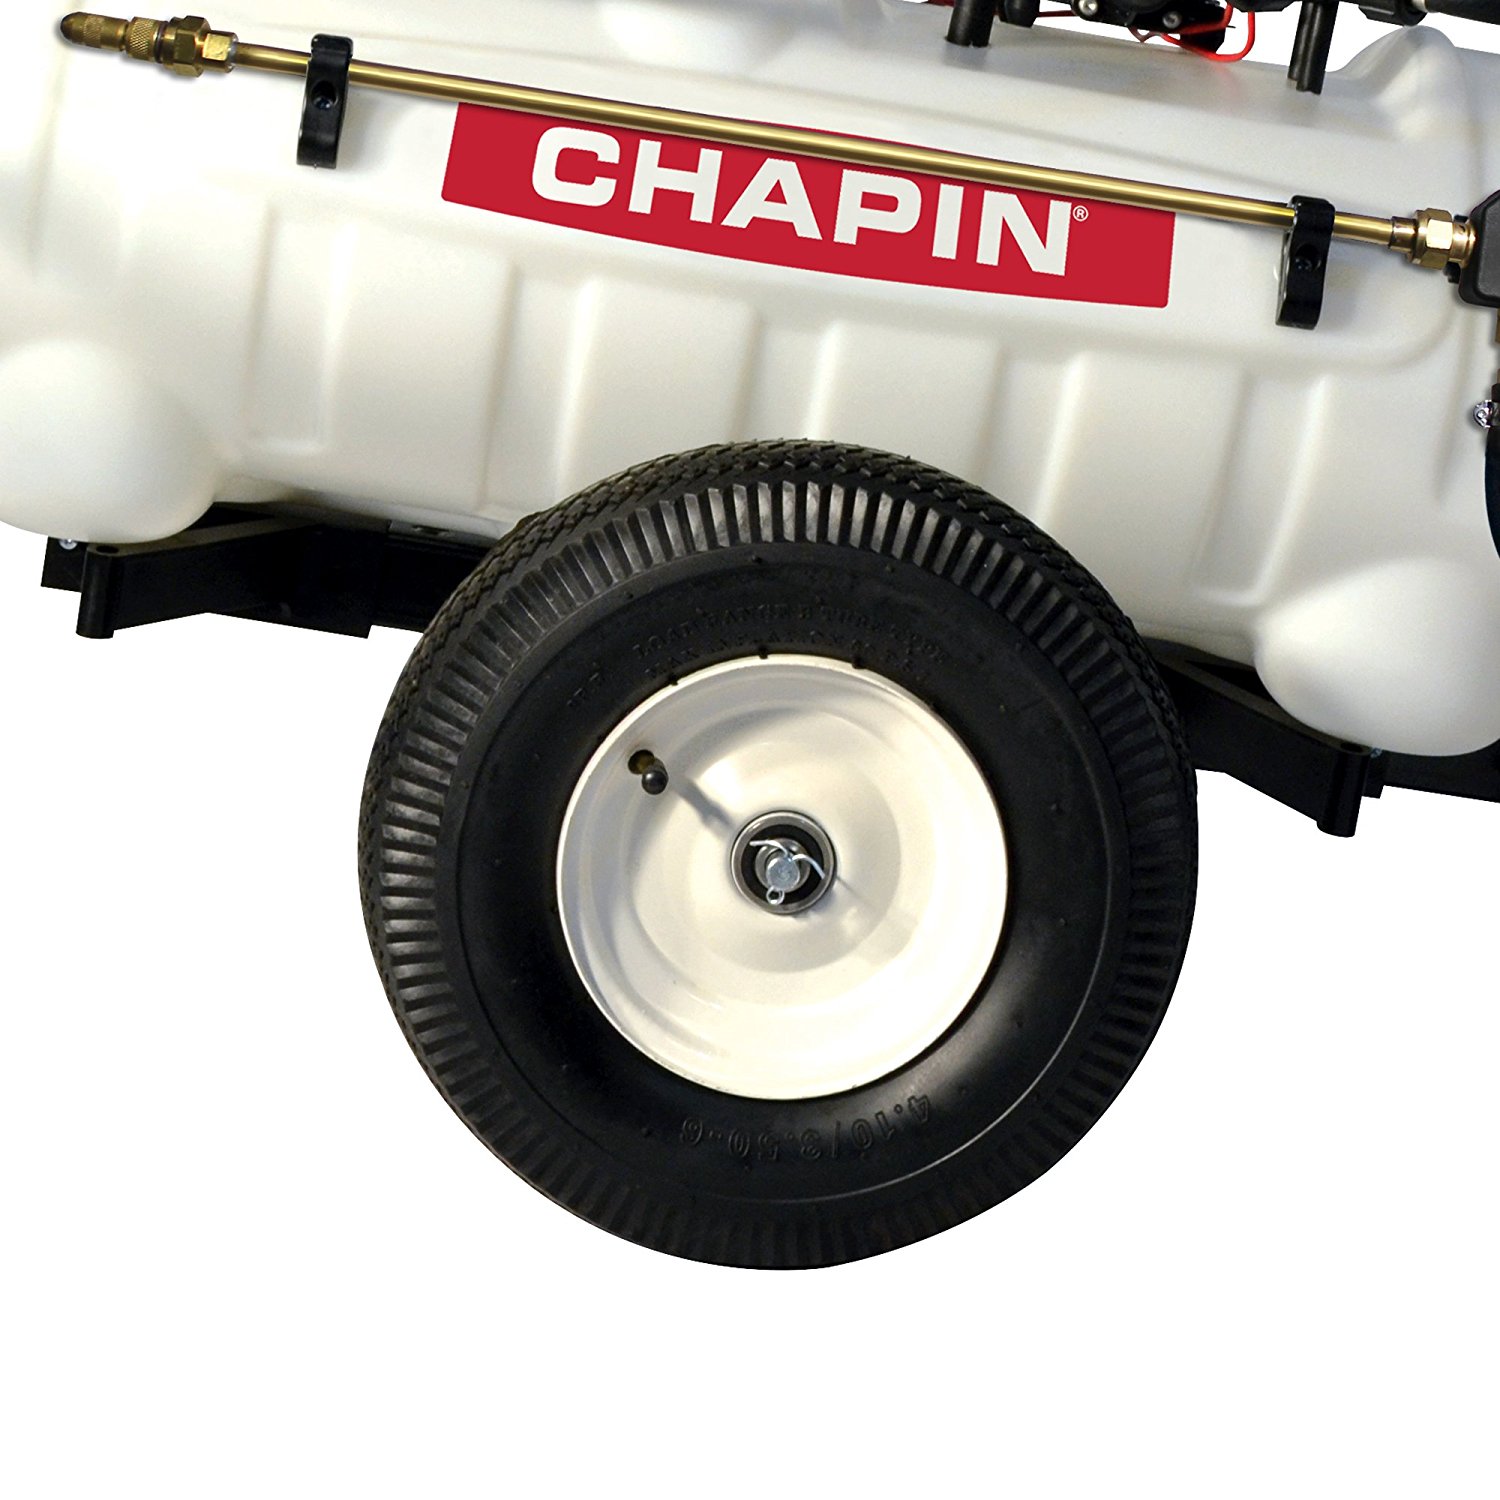 Chapin 97600 15-Gallon 12v EZ Tow Dripless Sprayer - image 5 of 5